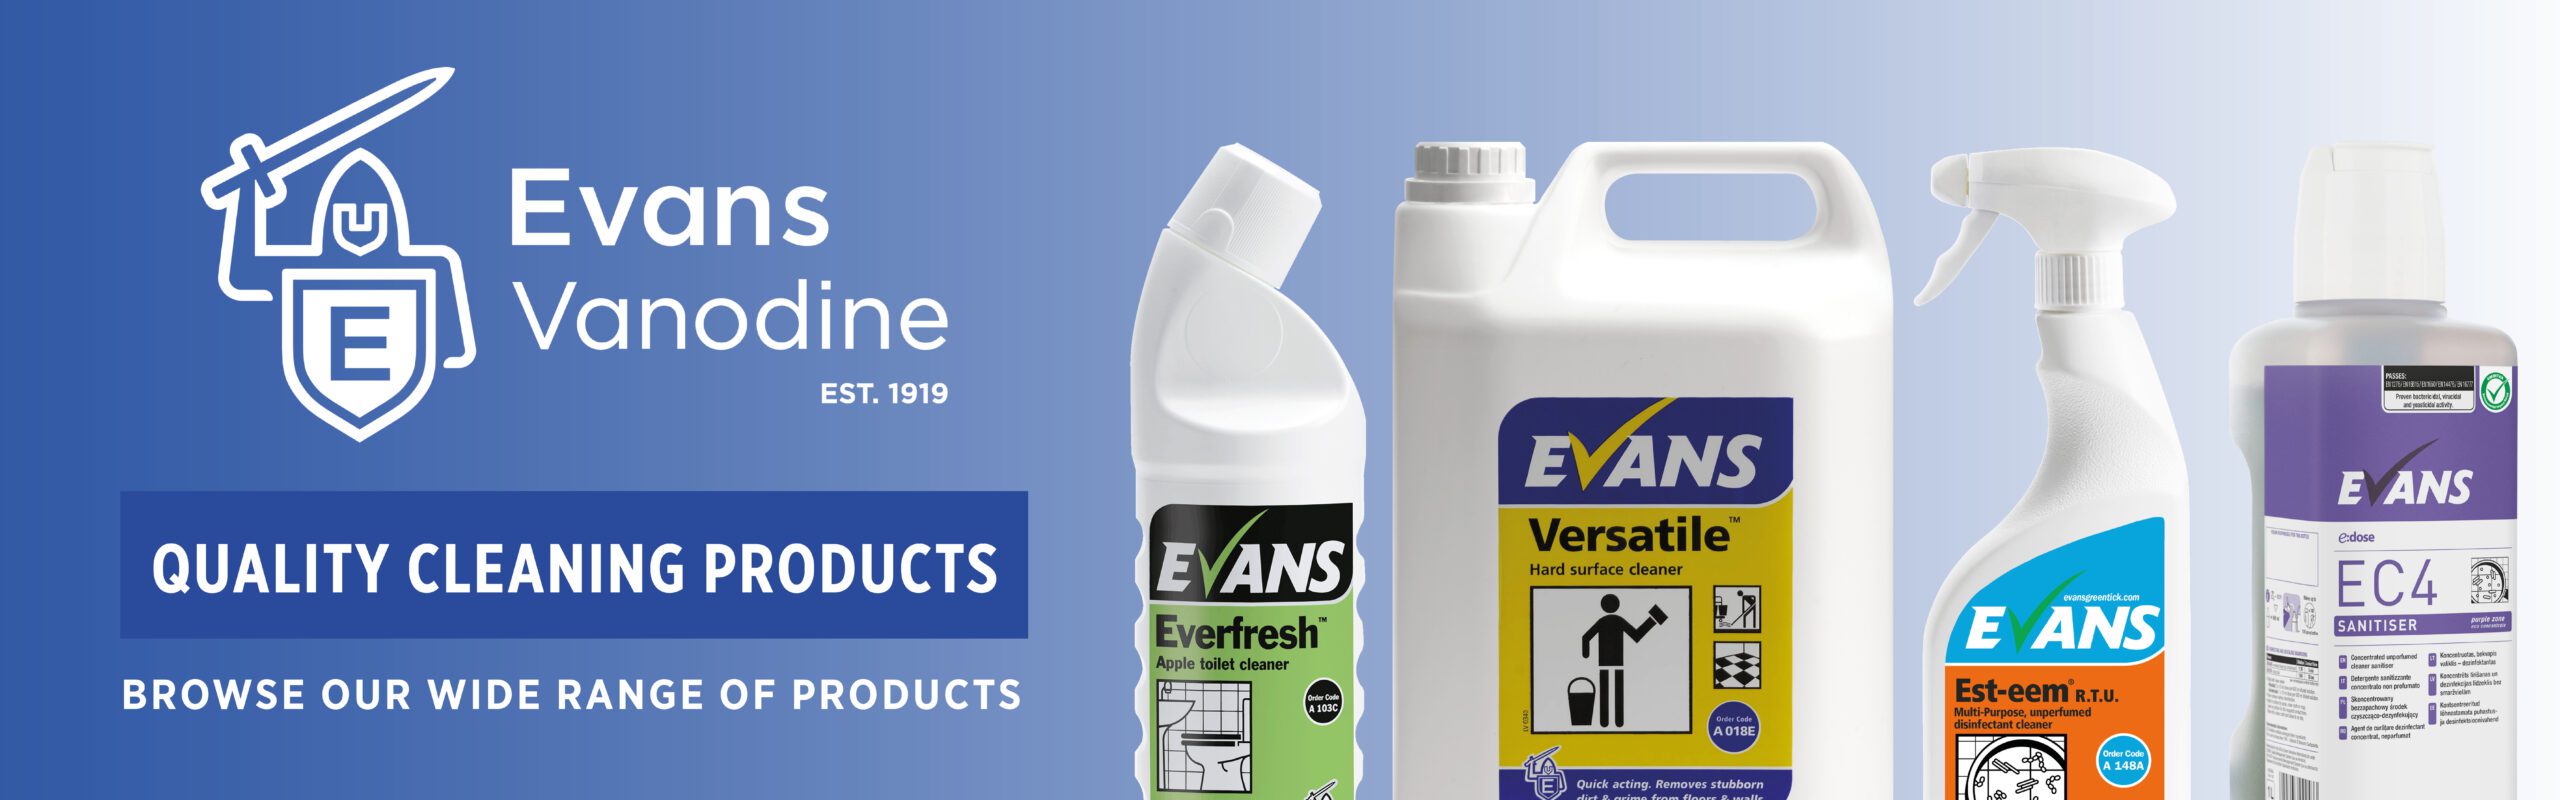 Evans Products Range